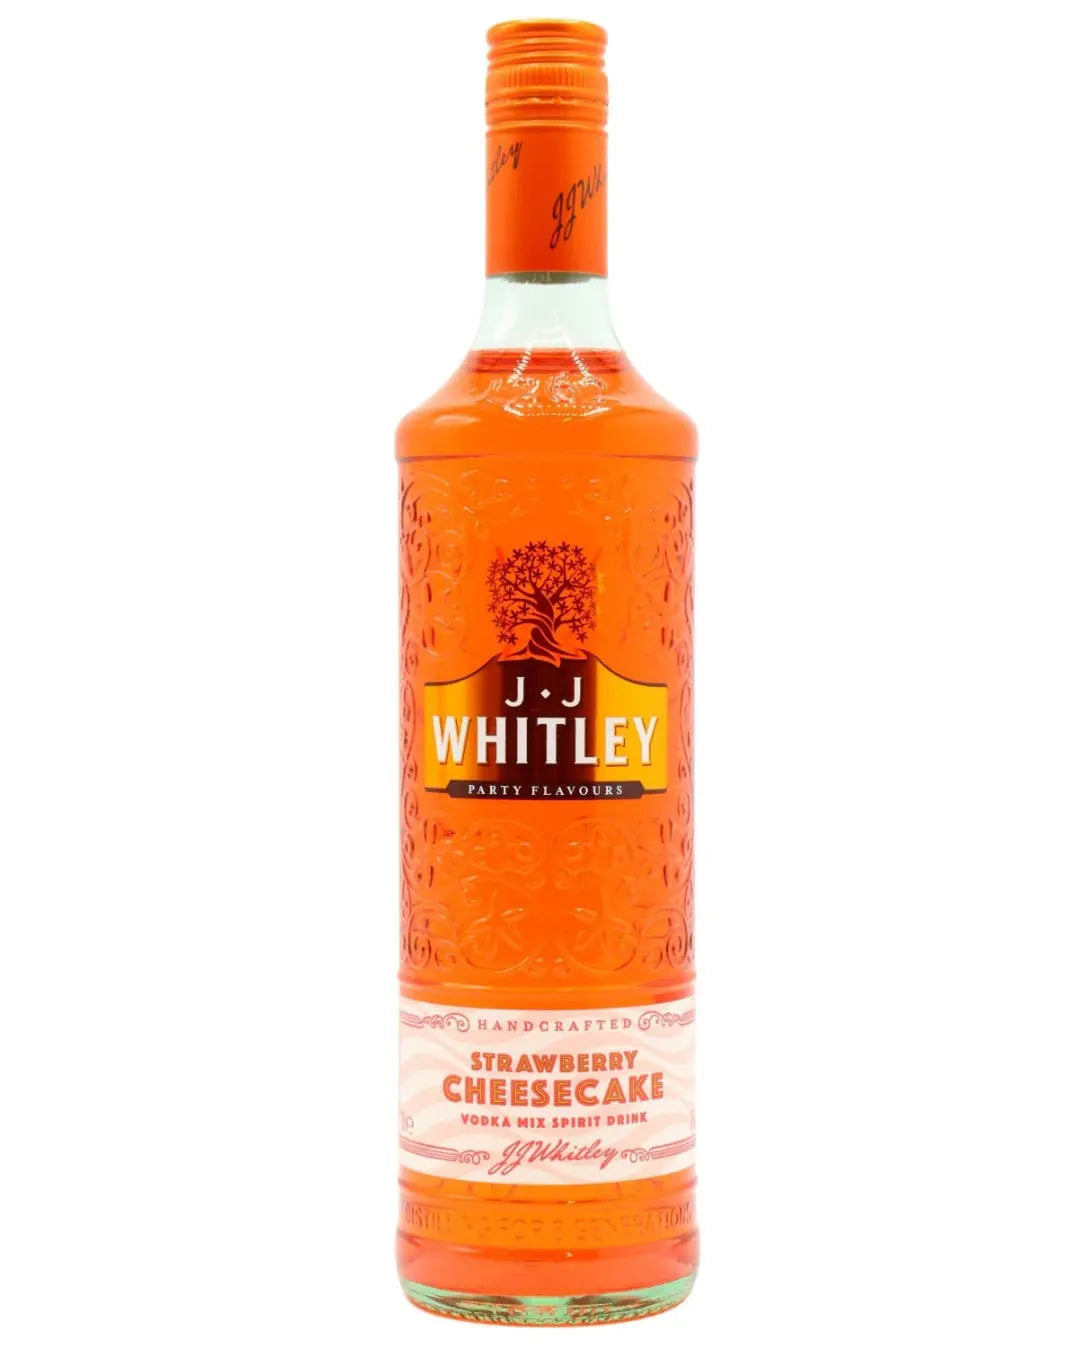 J.J. Whitley Strawberry Cheesecake Vodka Mix Spirit Drink, 70 cl Vodka